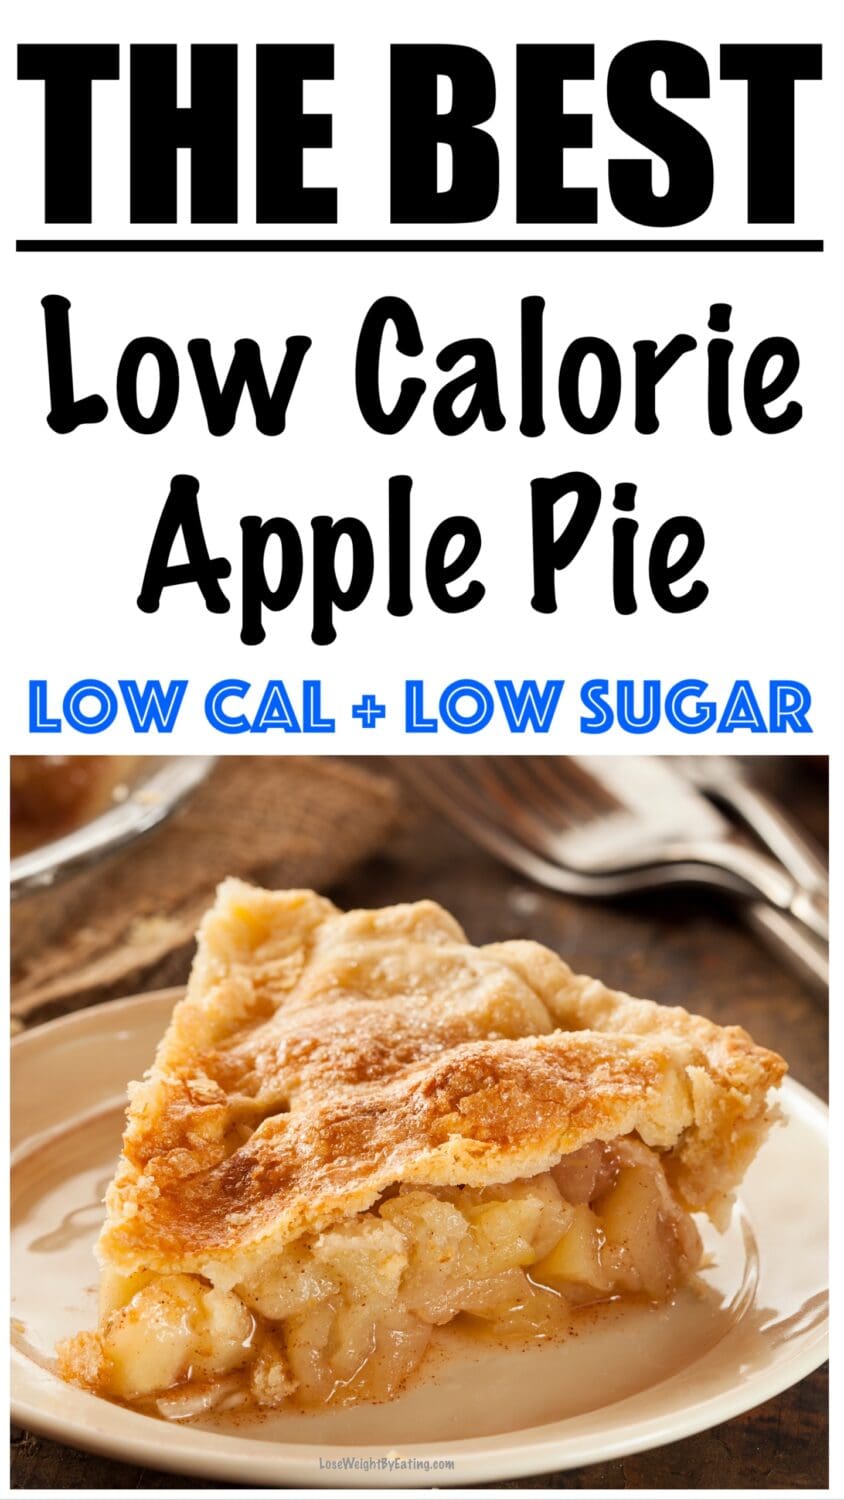 Low Calorie Apple Pie Recipe